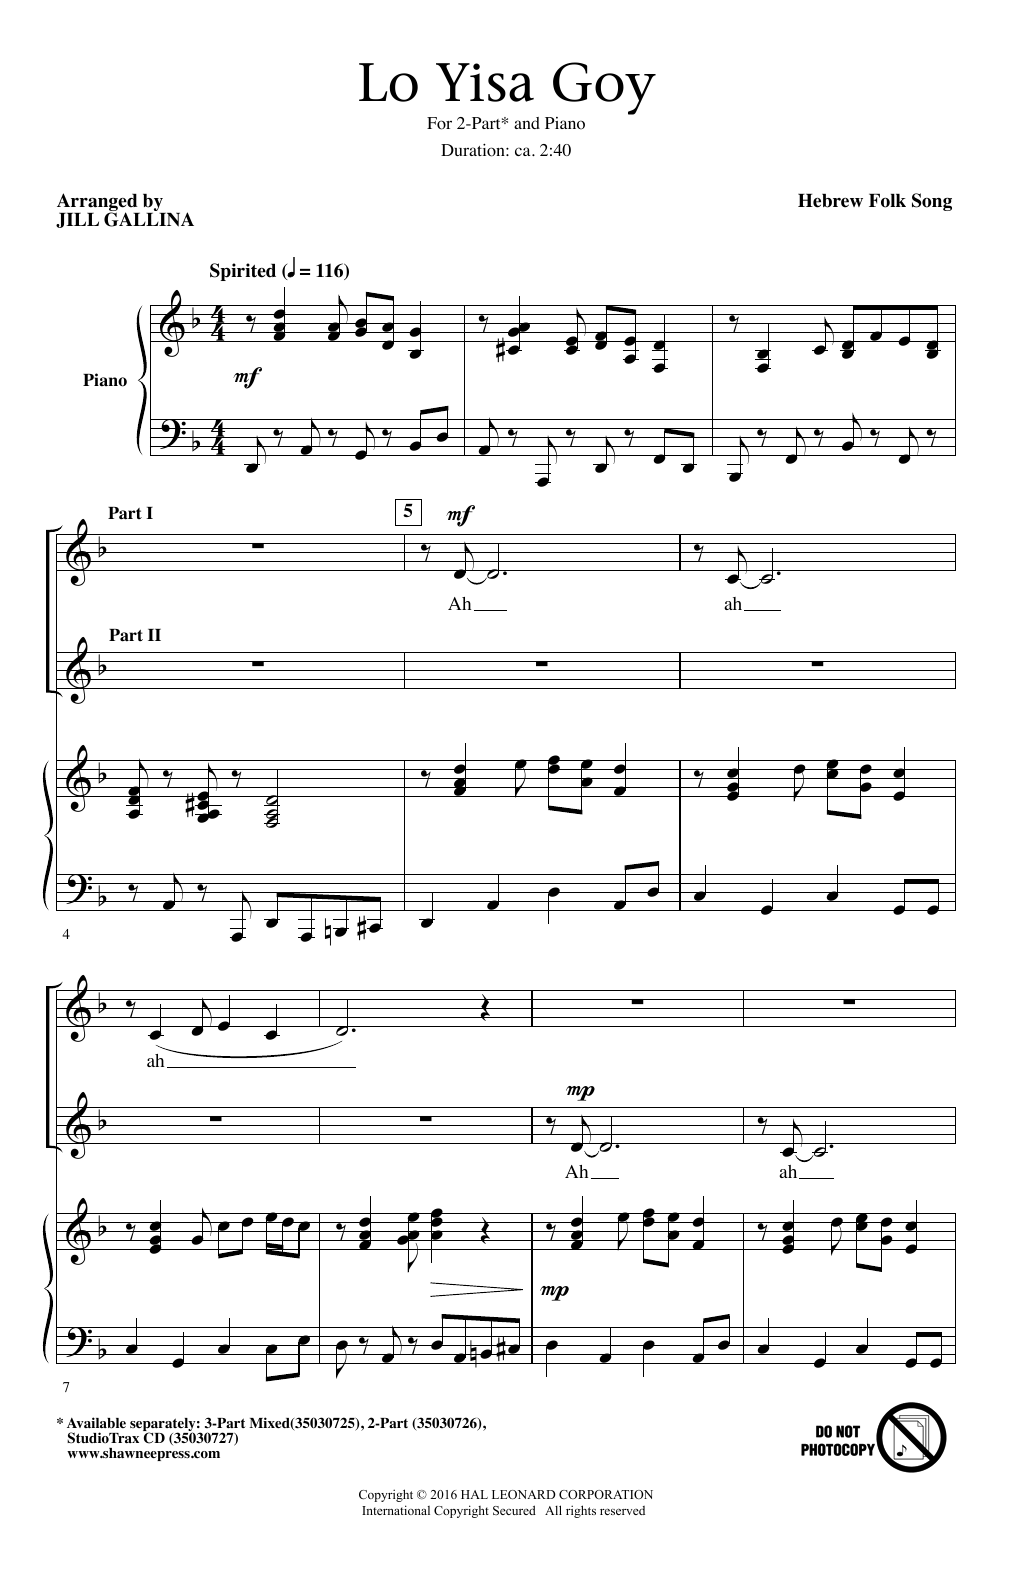 Hebrew Folk Song Lo Yisa Goy (arr. Jill Gallina) Sheet Music Notes & Chords for 3-Part Mixed - Download or Print PDF